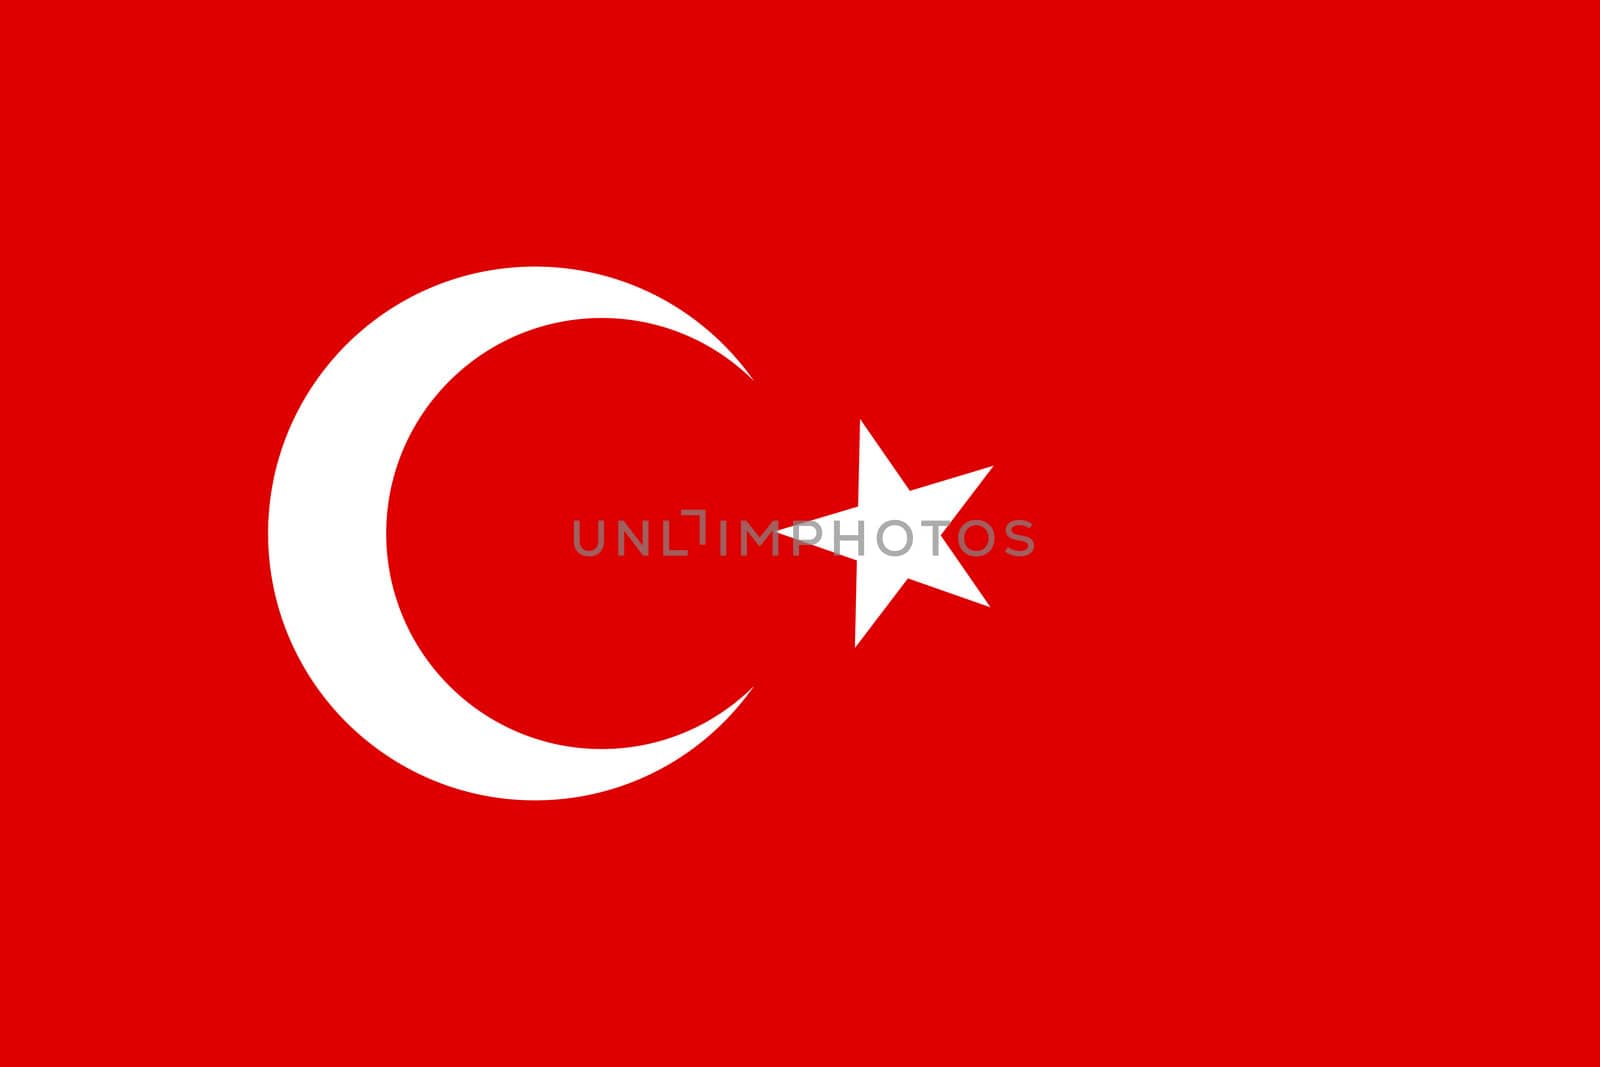 Flag of Turkey by peromarketing